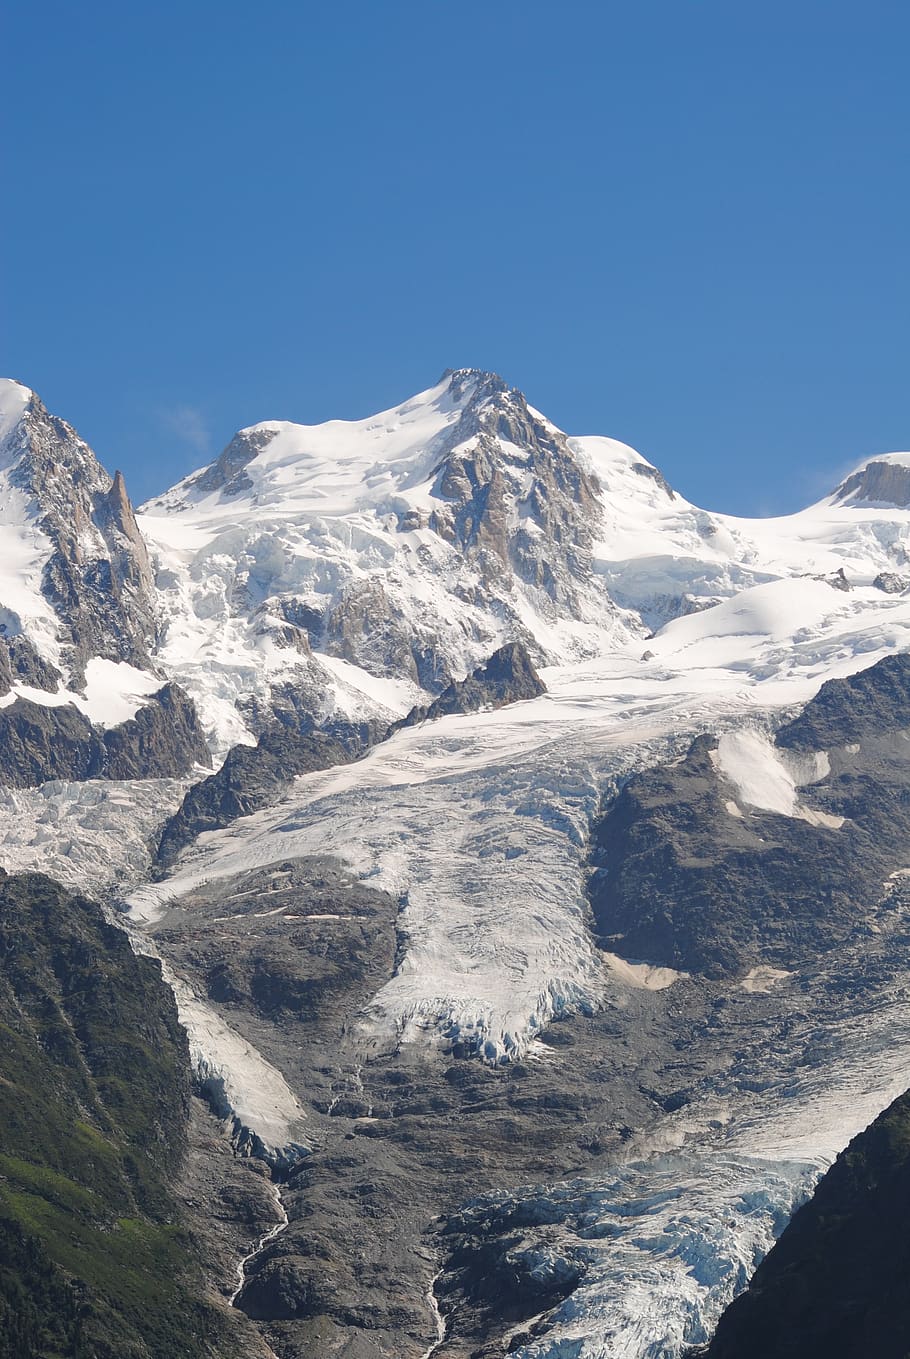 alps, mountain, snow, landscape, mont blanc, hautes alpes, snowy, scenics - nature, beauty in nature, cold temperature